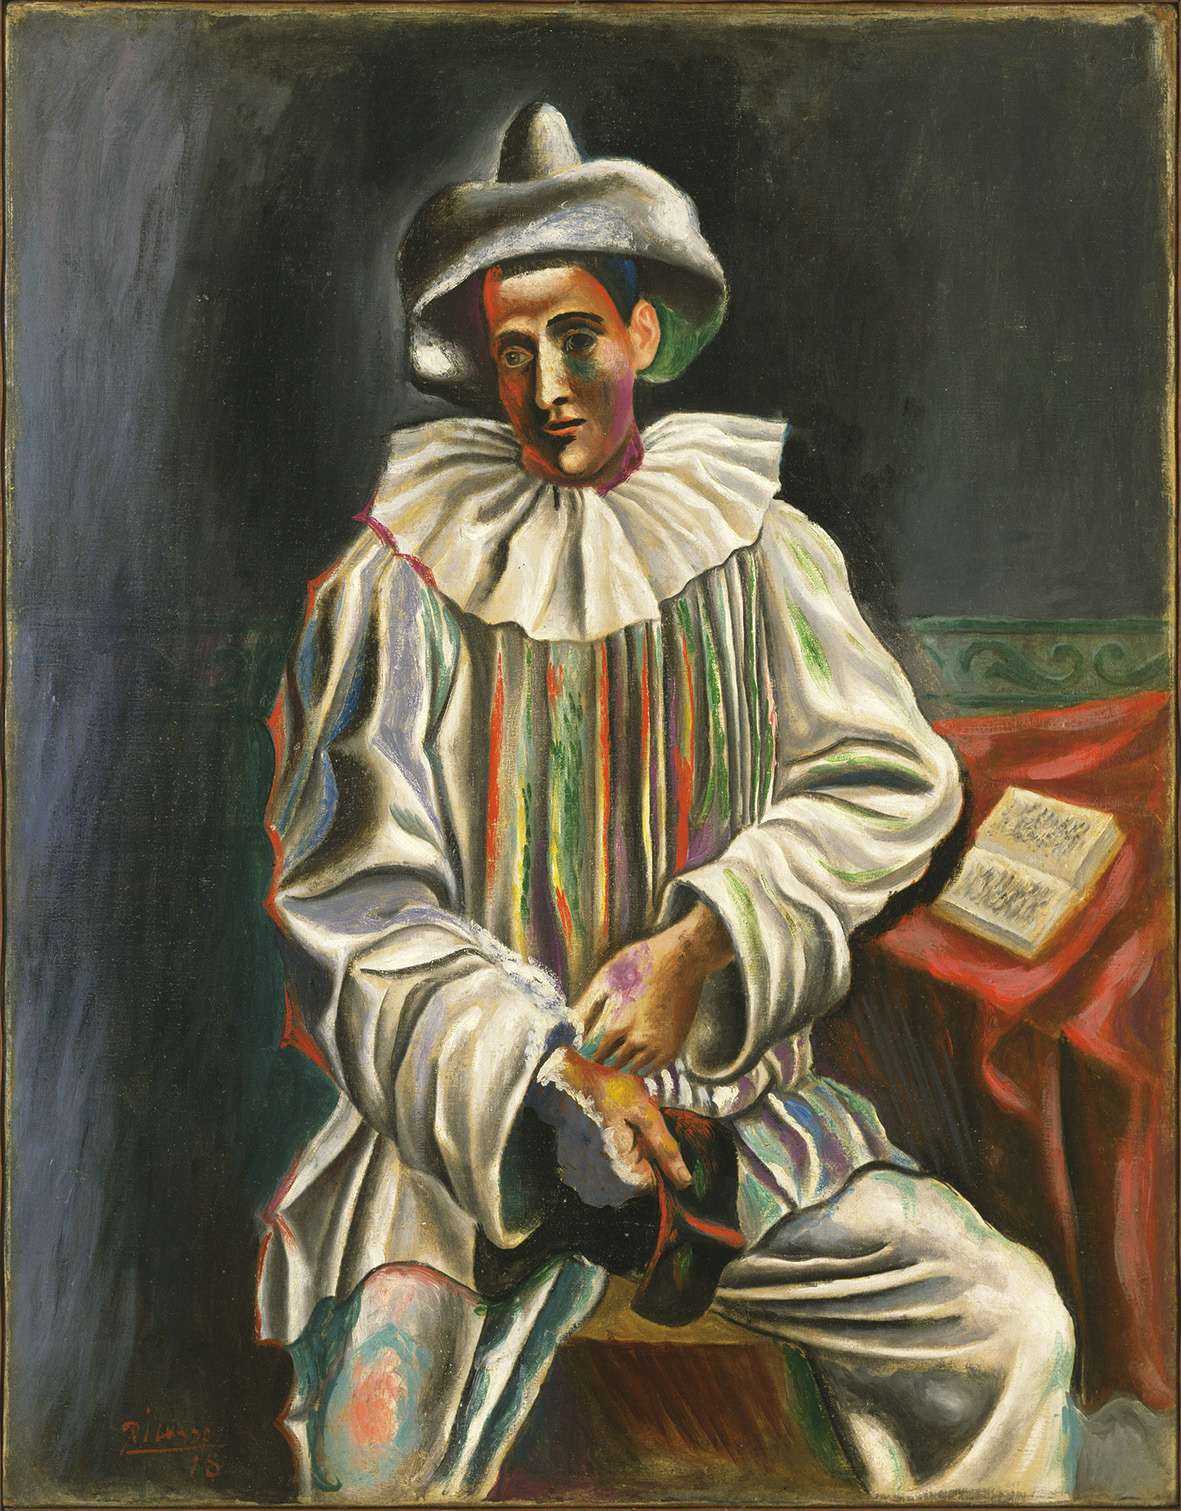 Pablo_Picasso,_1918,_Pierrot,_oil_on_canvas,_92.7_x_73_cm,_Museum_of_Modern_Art.jpg